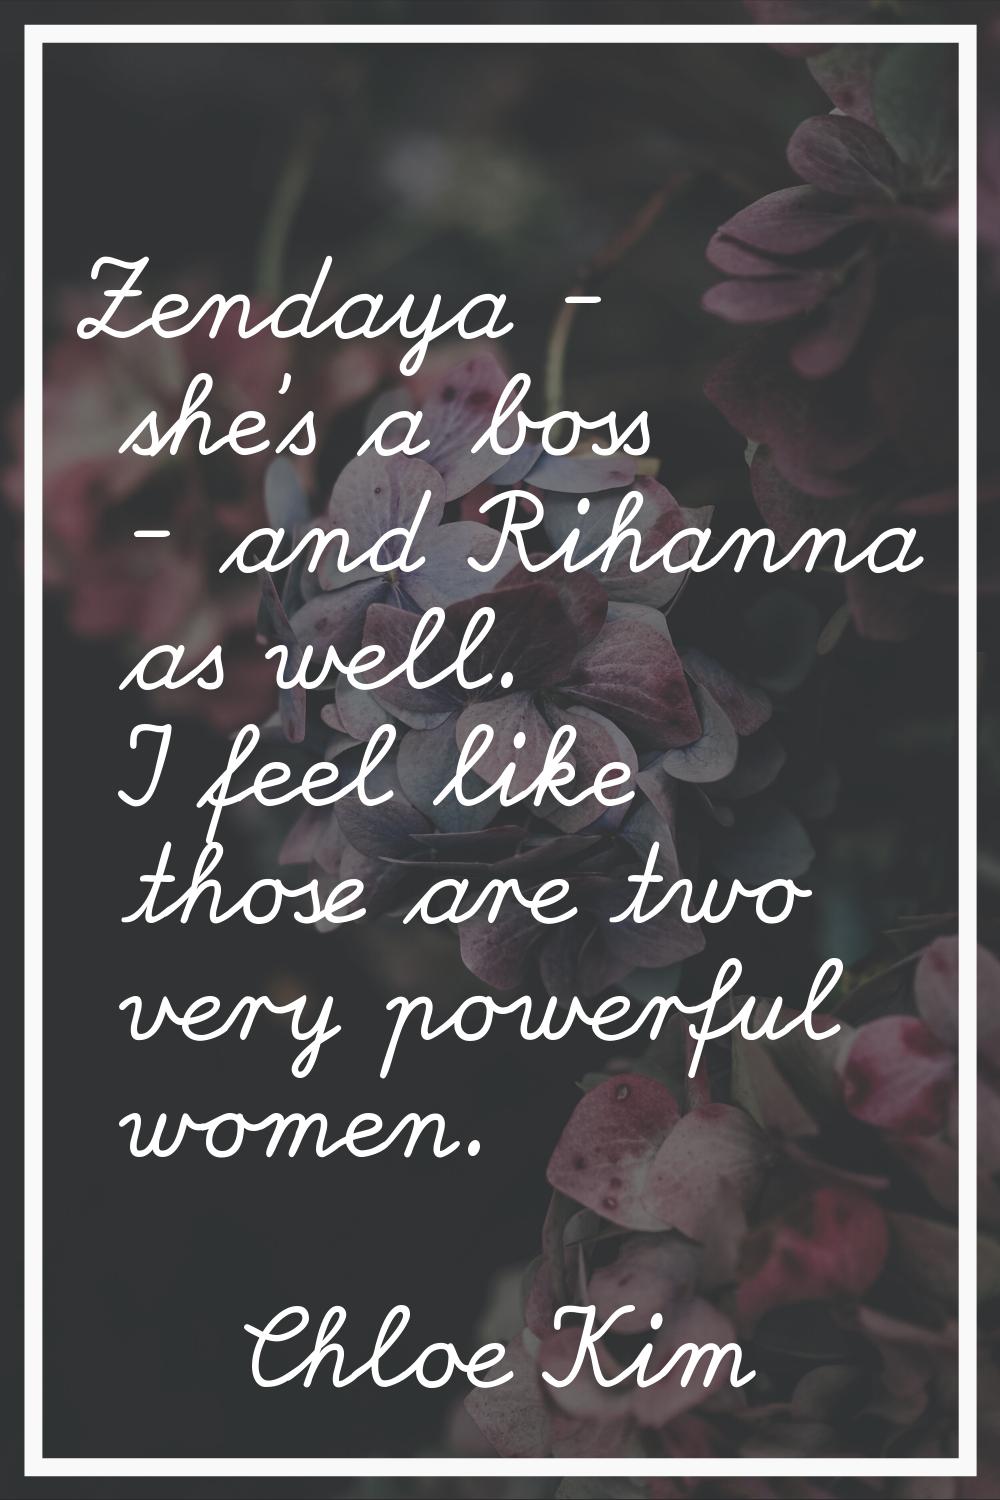 Zendaya - she's a boss - and Rihanna as well. I feel like those are two very powerful women.